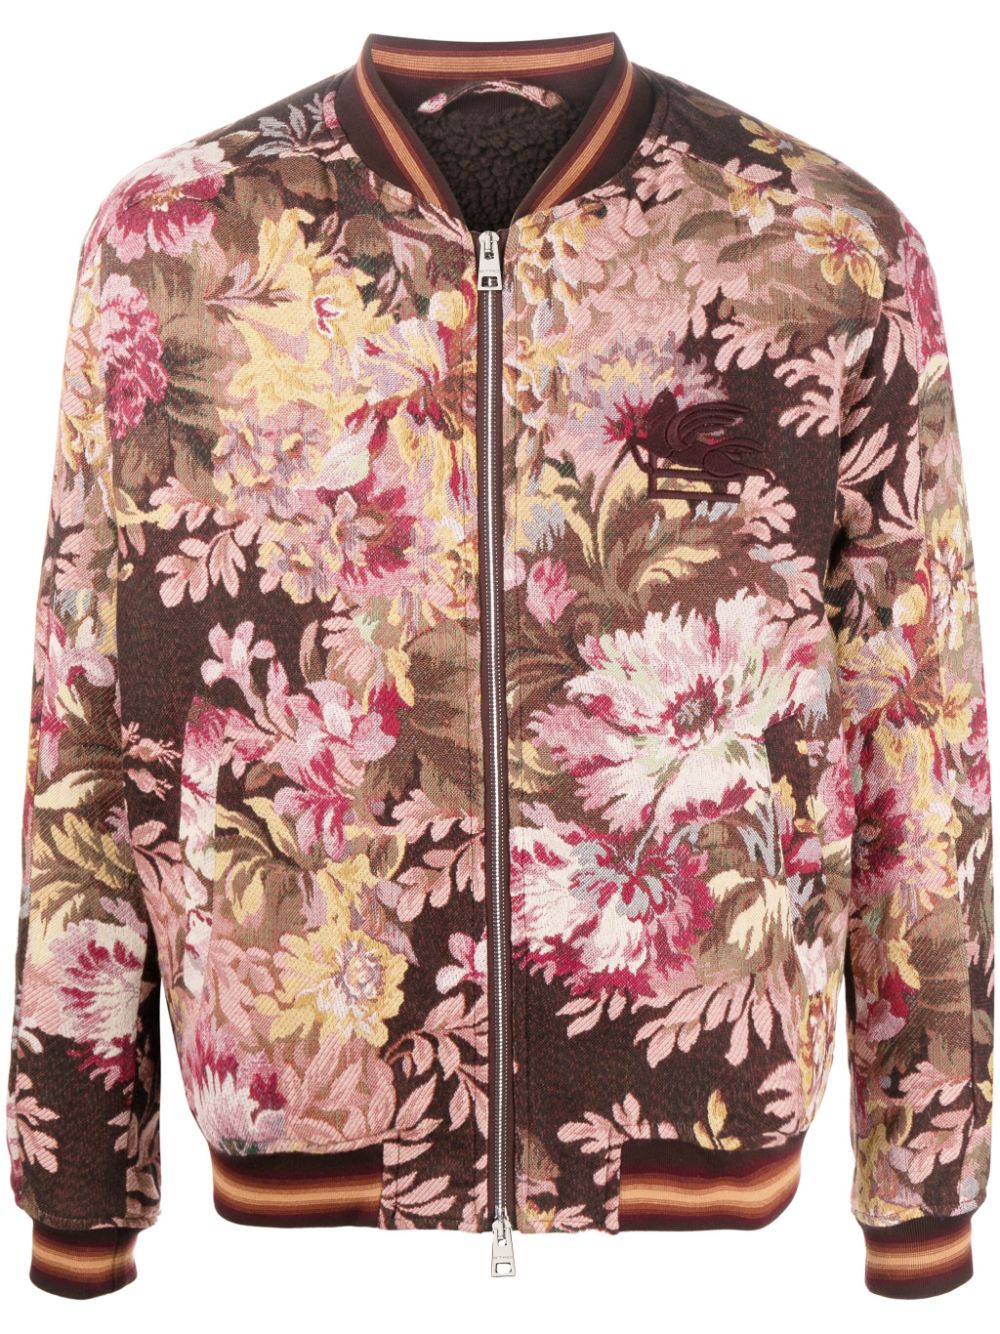 ETRO Jacquard Floral-Print Bomber Jacket for Men